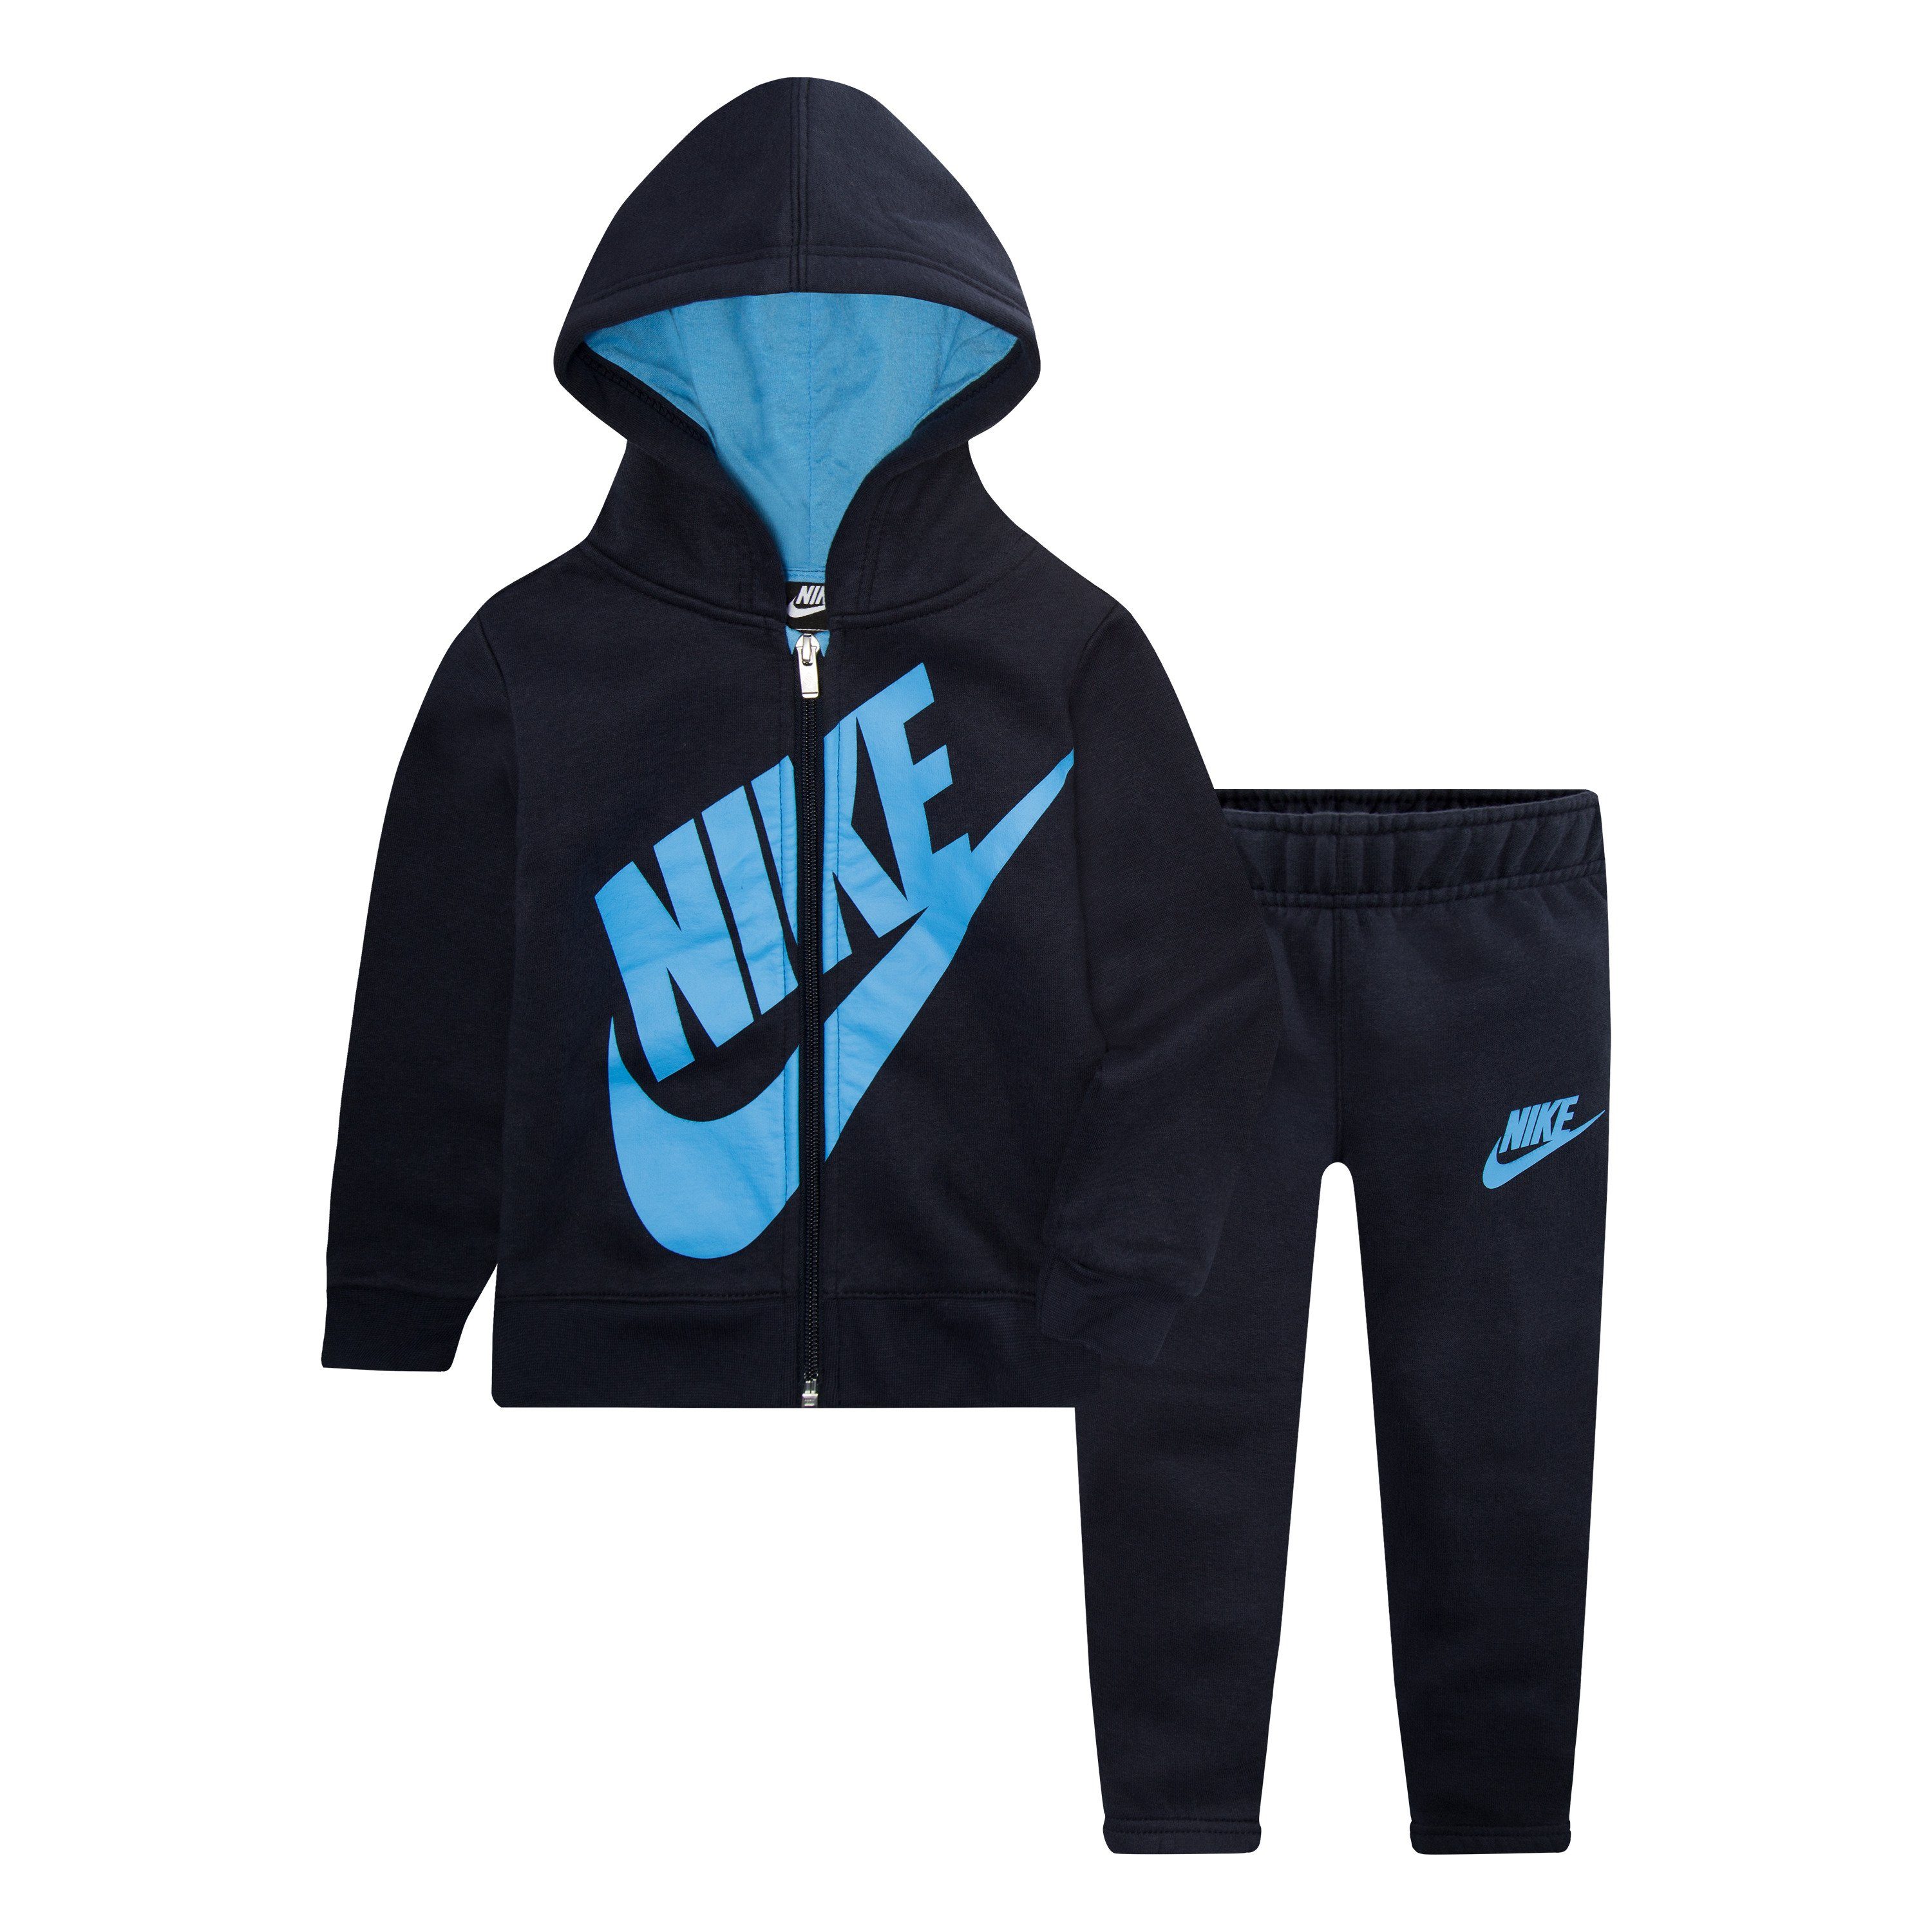 Nike Sportswear NKB SE FUTURA Jogginganzug marine-blau FLEECE SUEDED JOGG